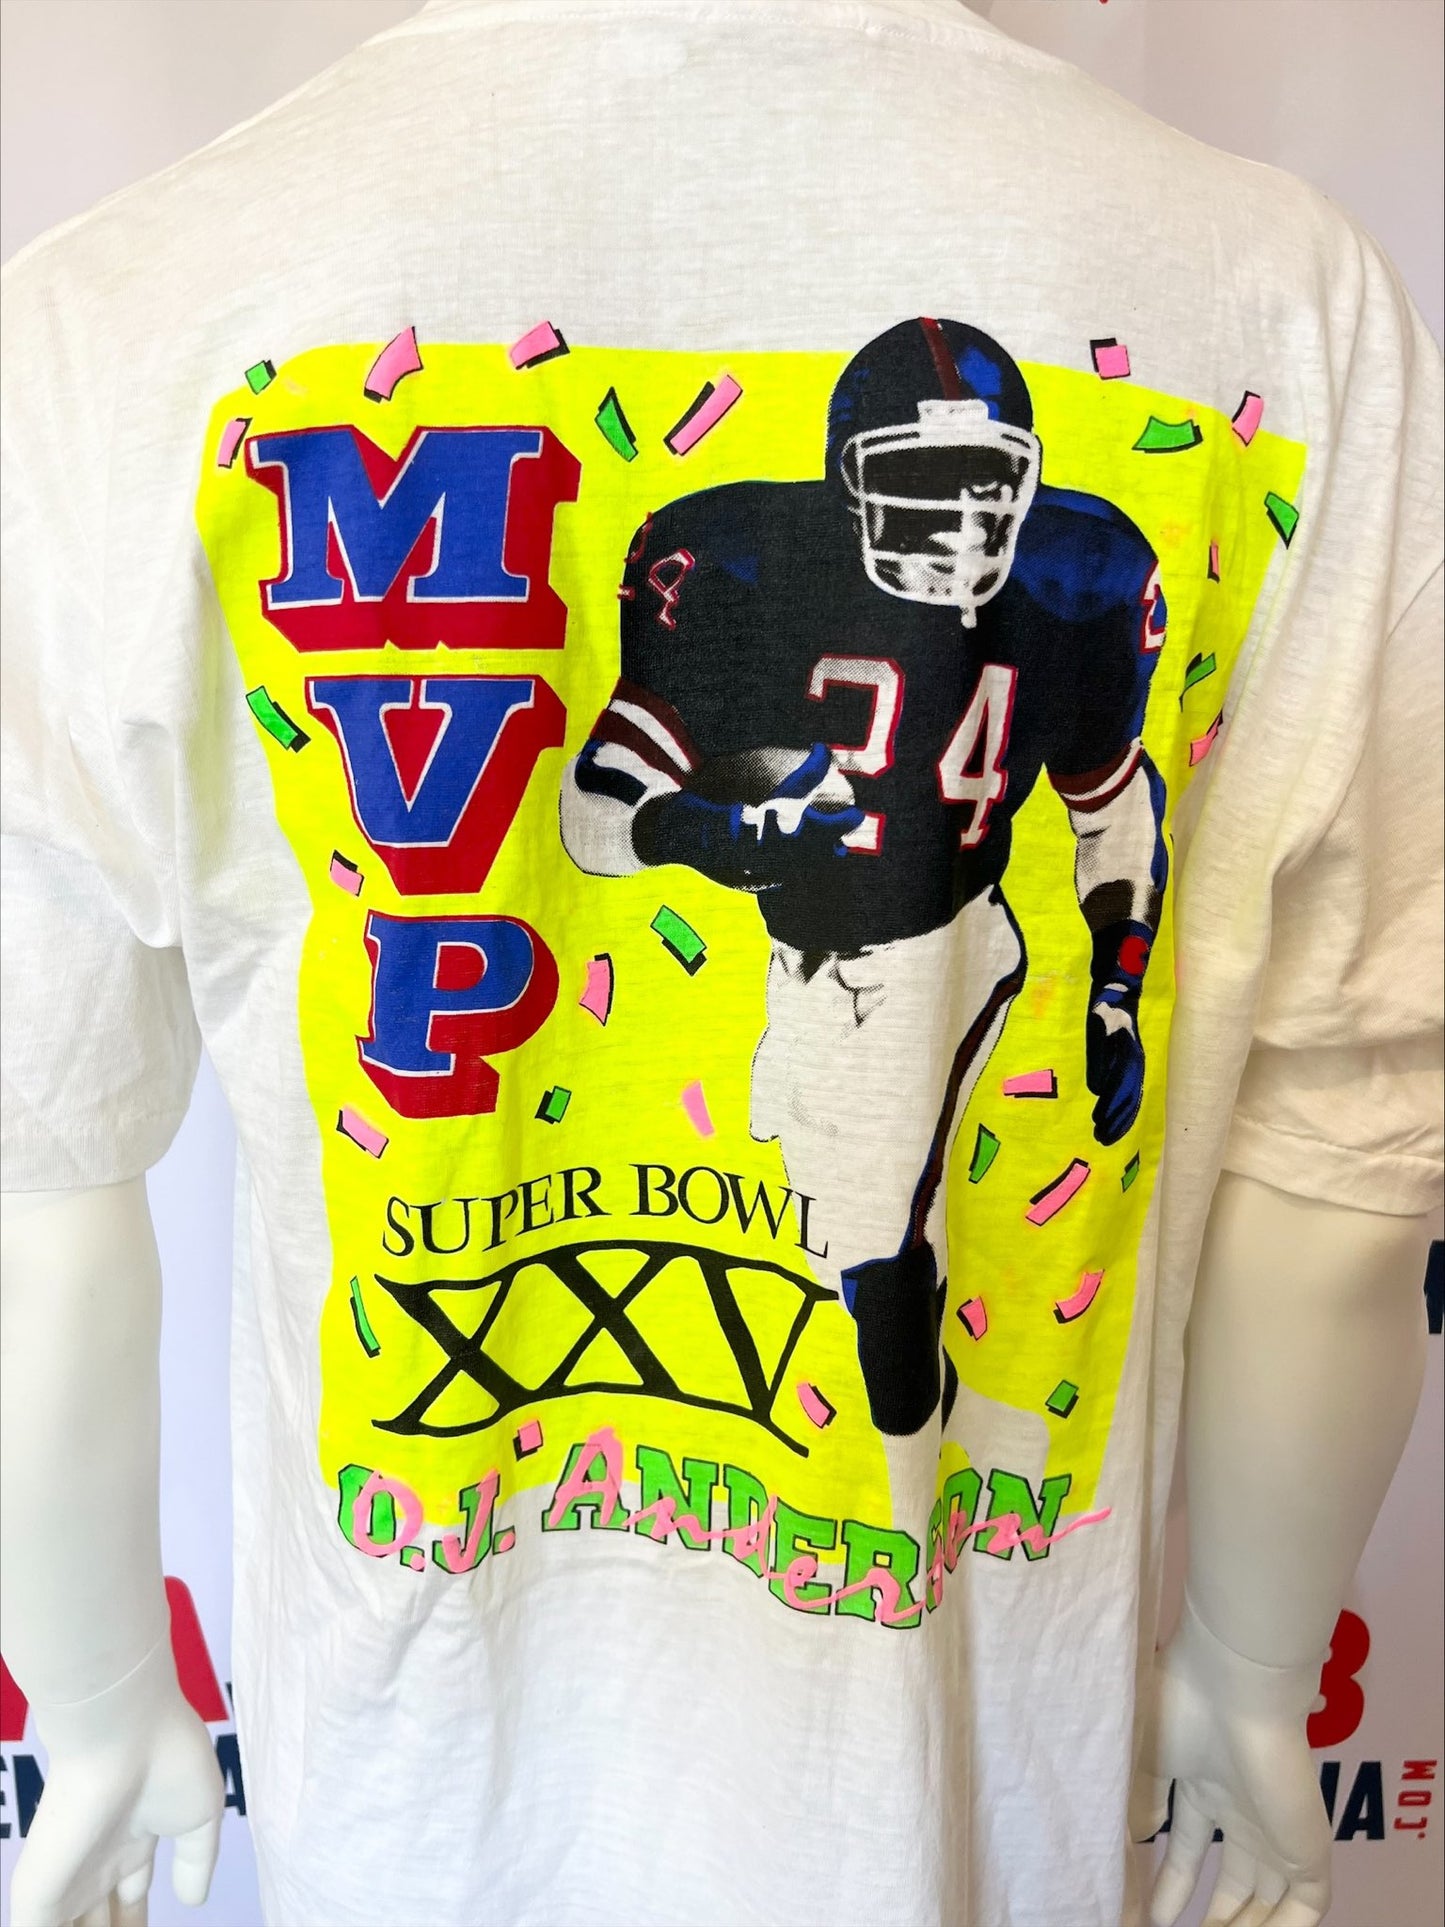 OJ Anderson Signed Super Bowl Shirt RARE and EXCLUSIVE Inscribed 1991 MVP COA